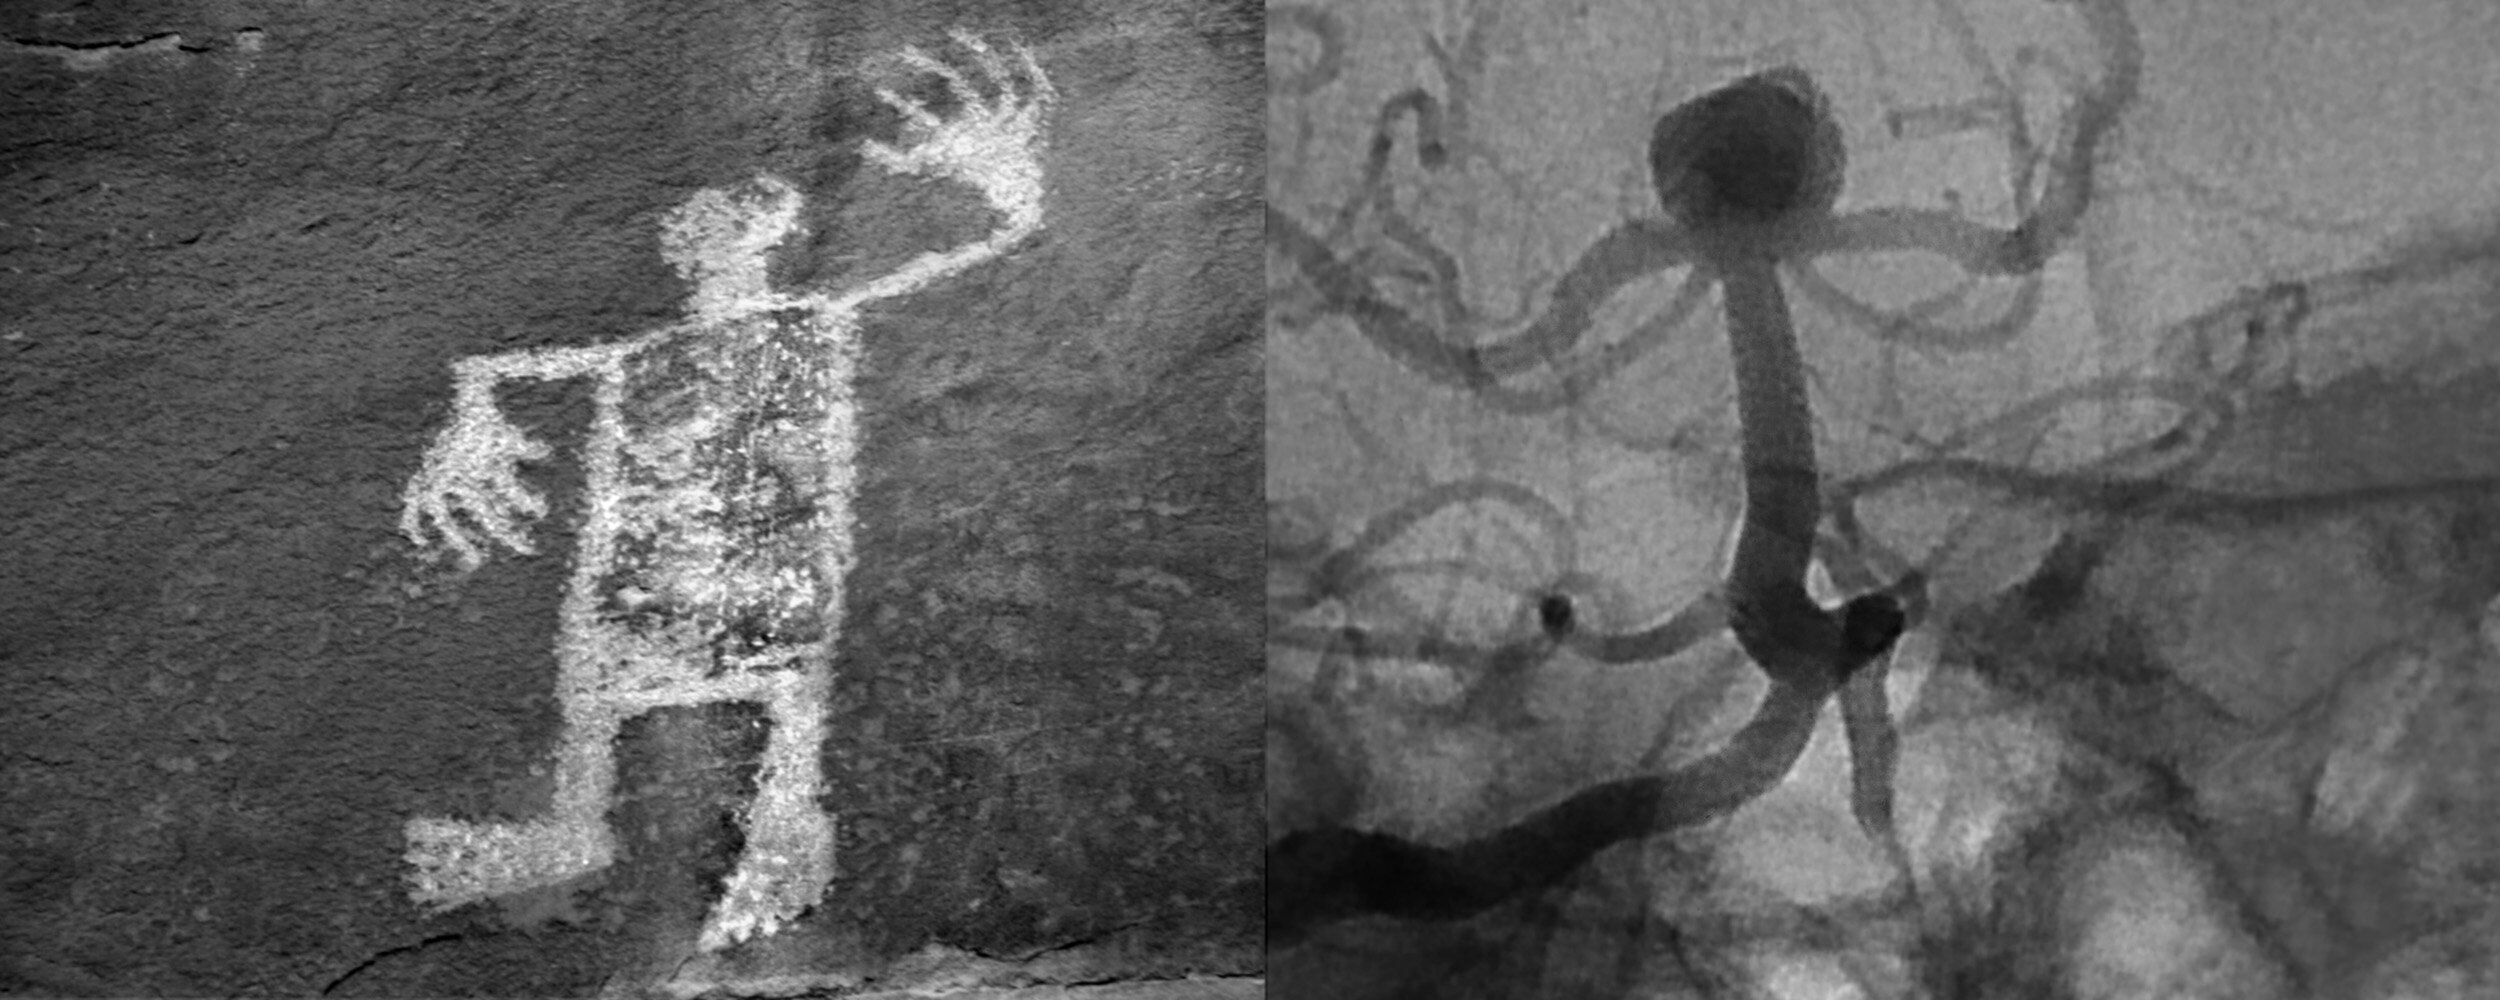 Petroglyph pair2.jpg